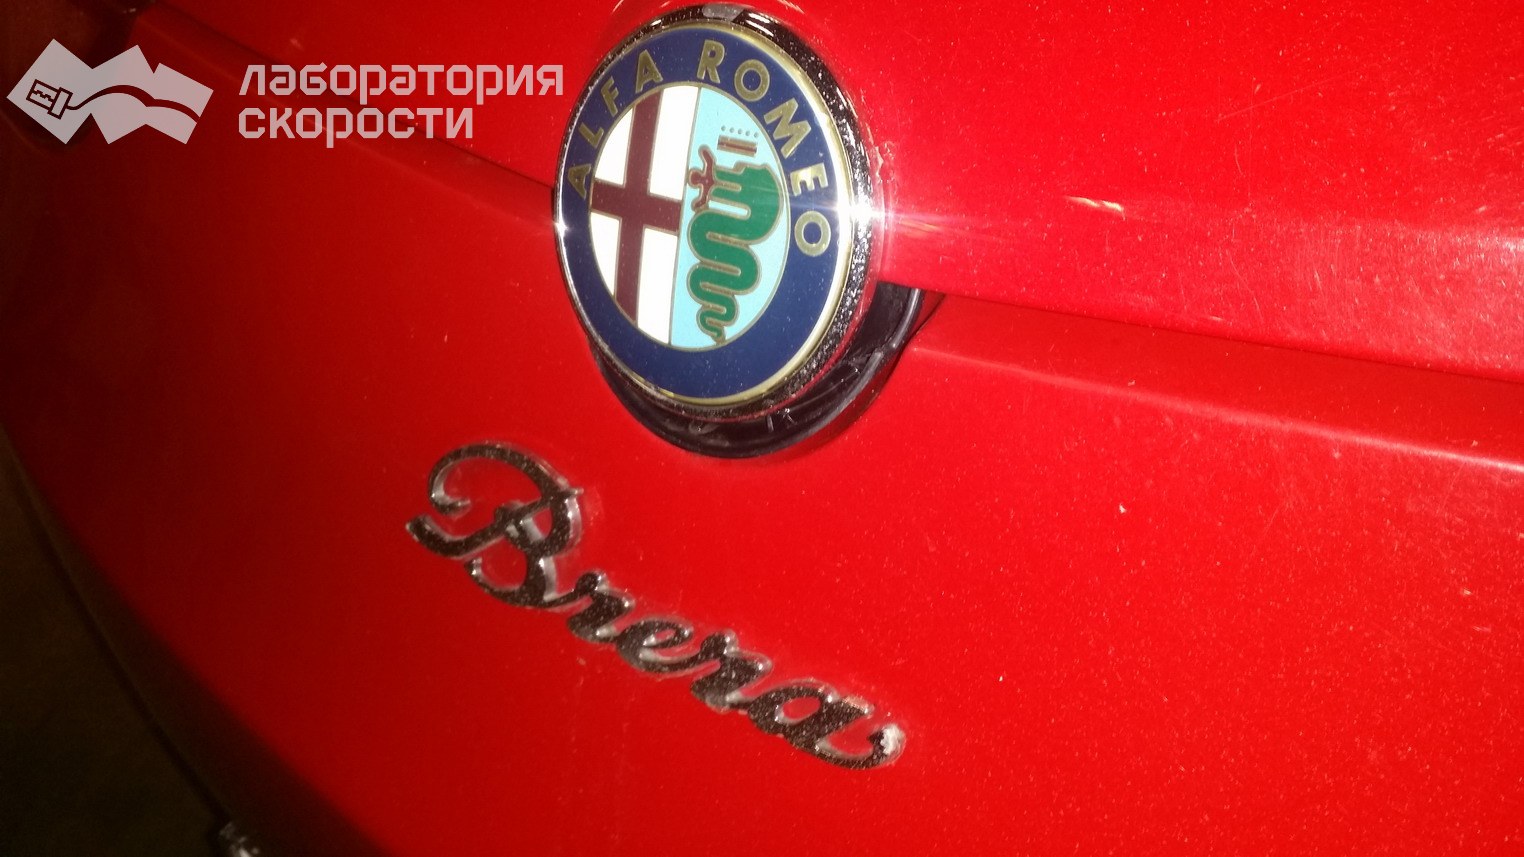 Чип-тюнинг Alfa Romeo Brera 3.2 JTS. Удаление/отключение катализаторов. Отчет